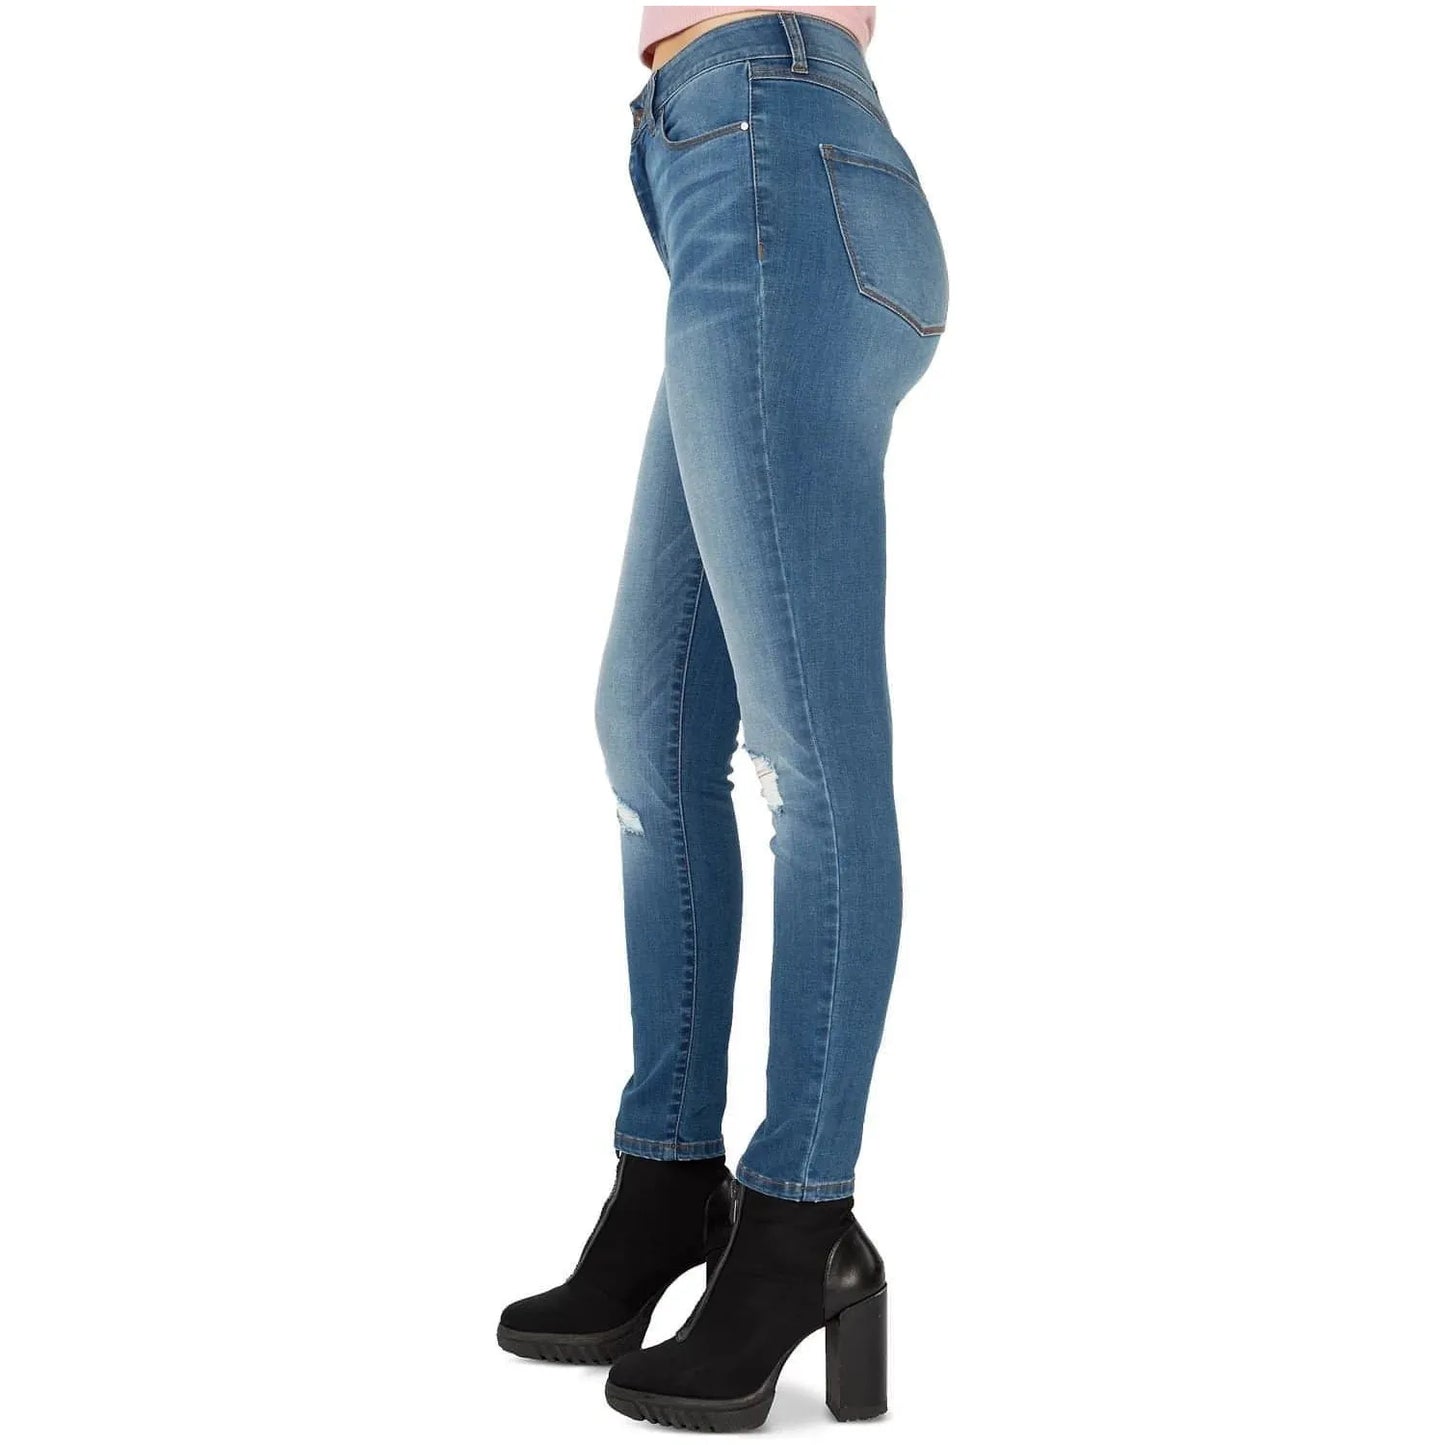 Rewash Juniors Stevie High-Rise Skinny Jeans, Blue, Size: 3 - Brandat Outlet